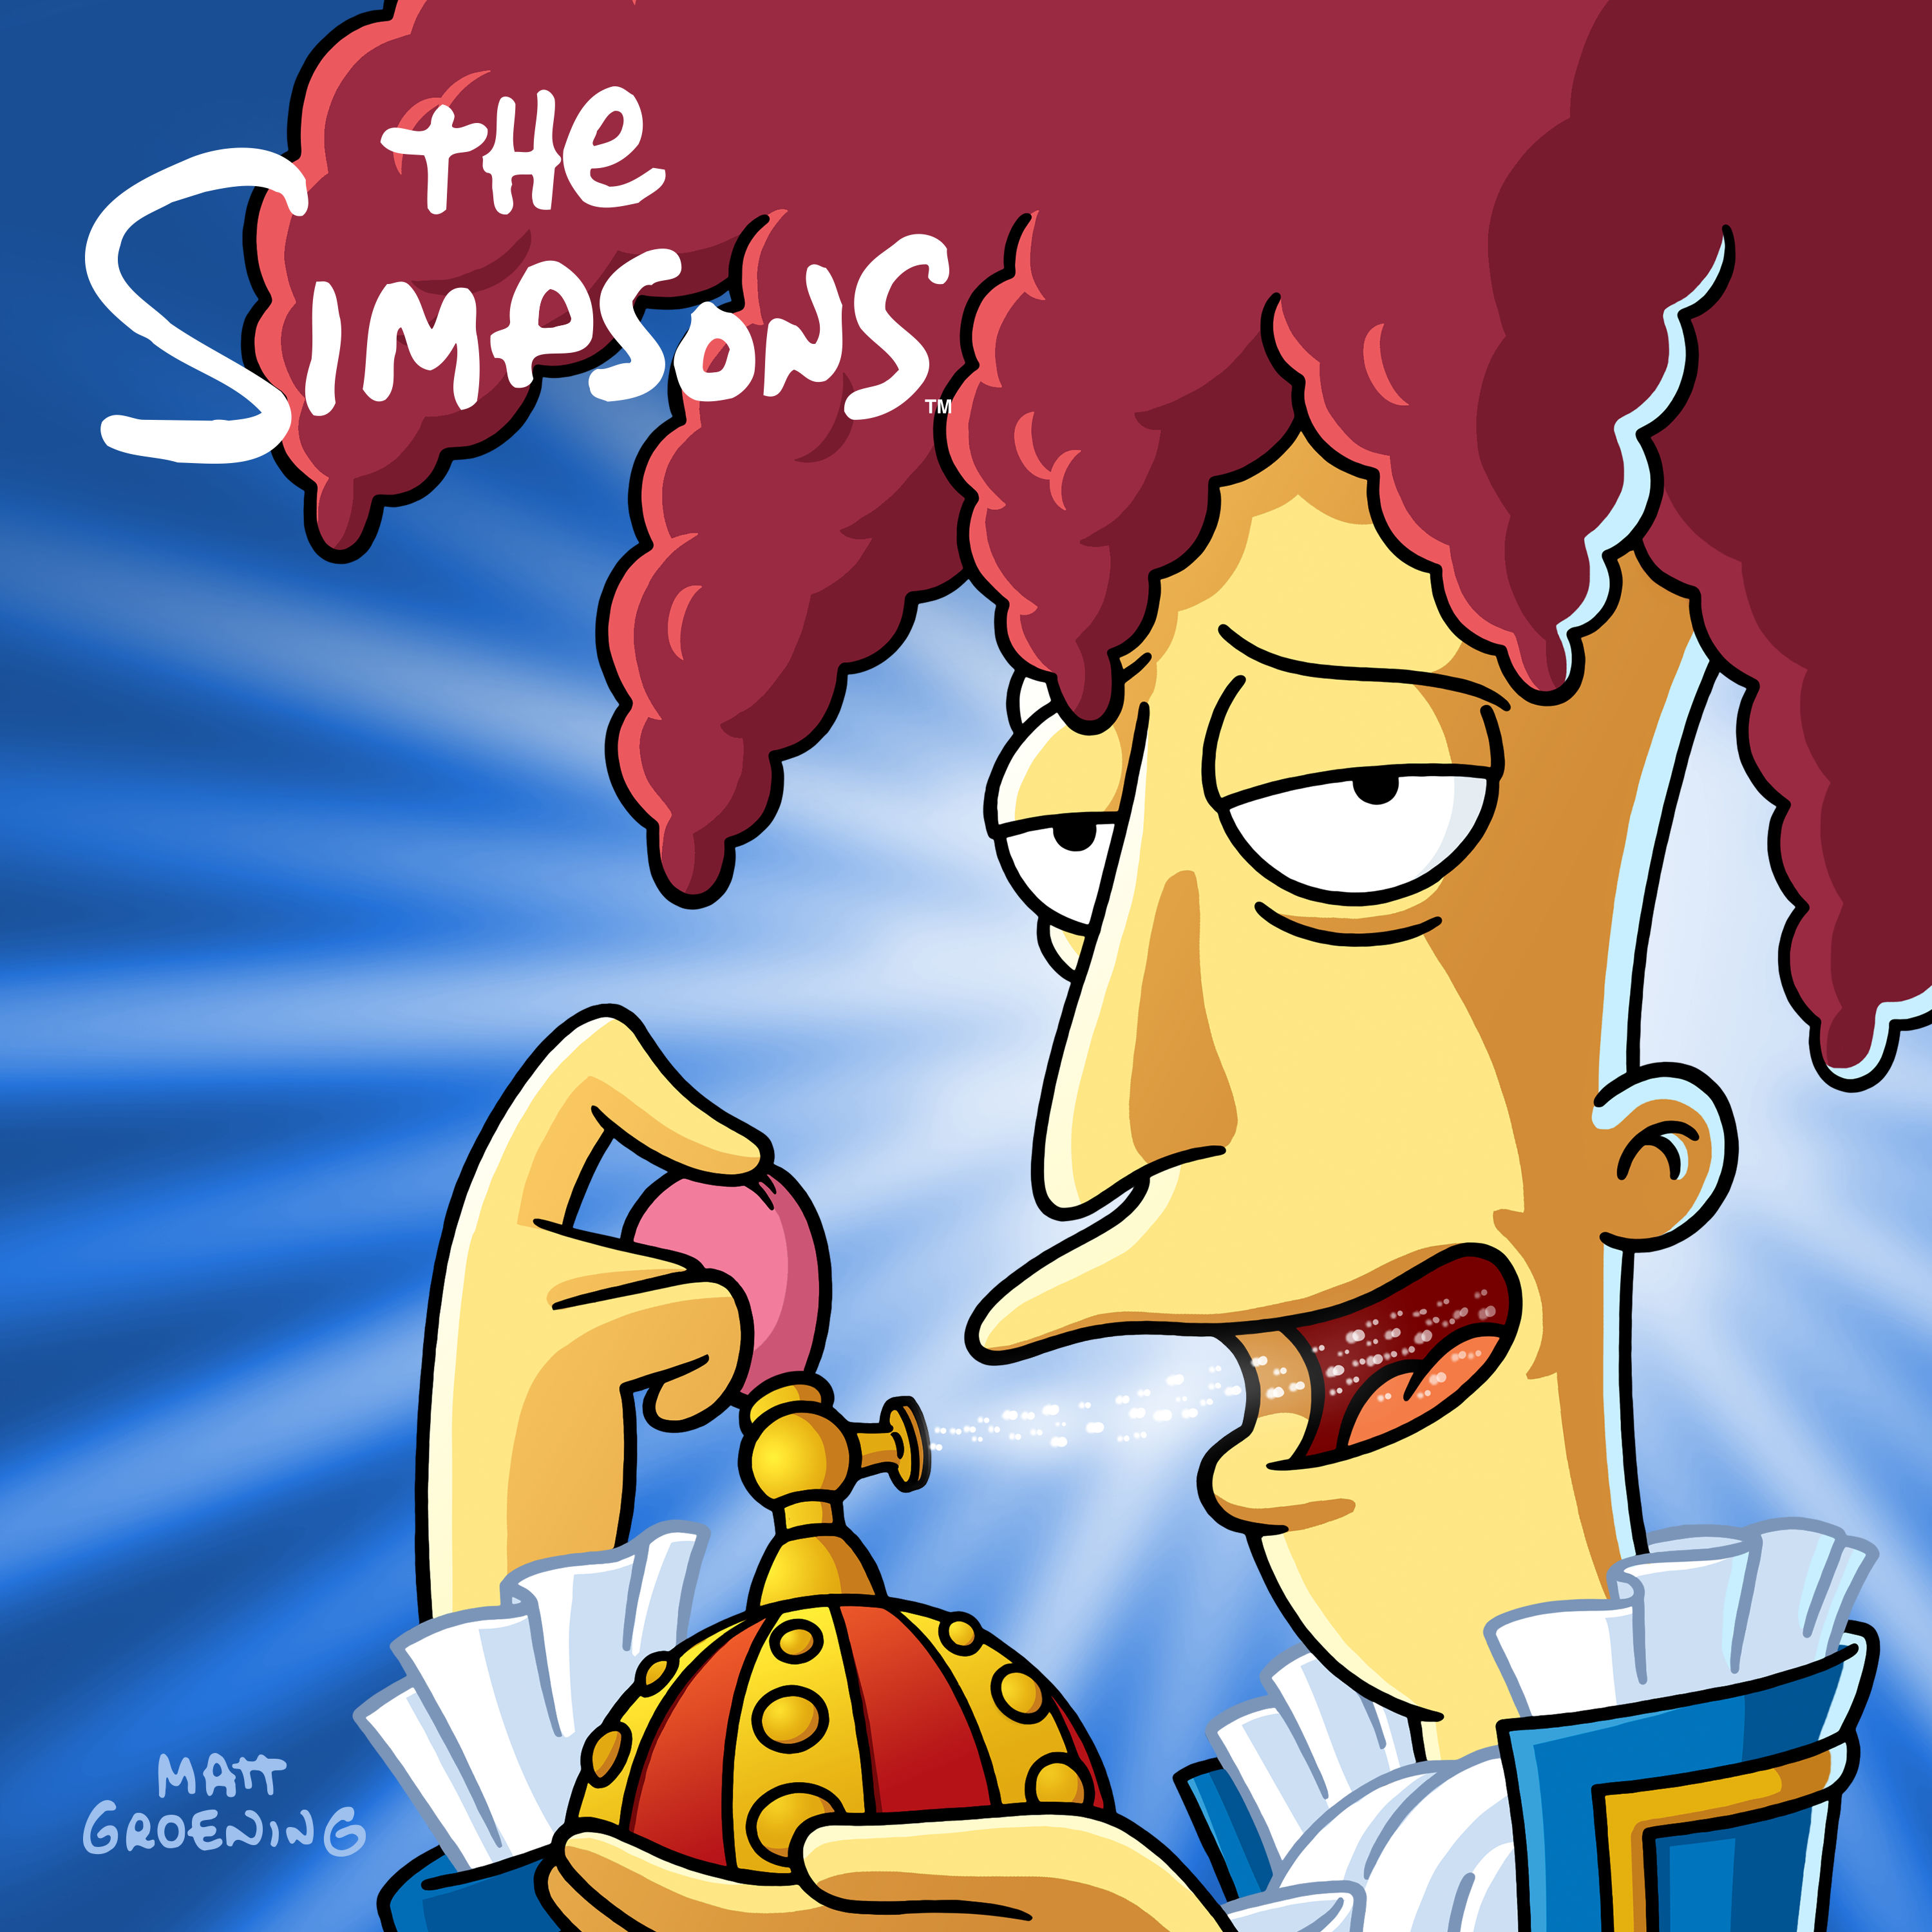 the simpsons season 13 dvdrip download free